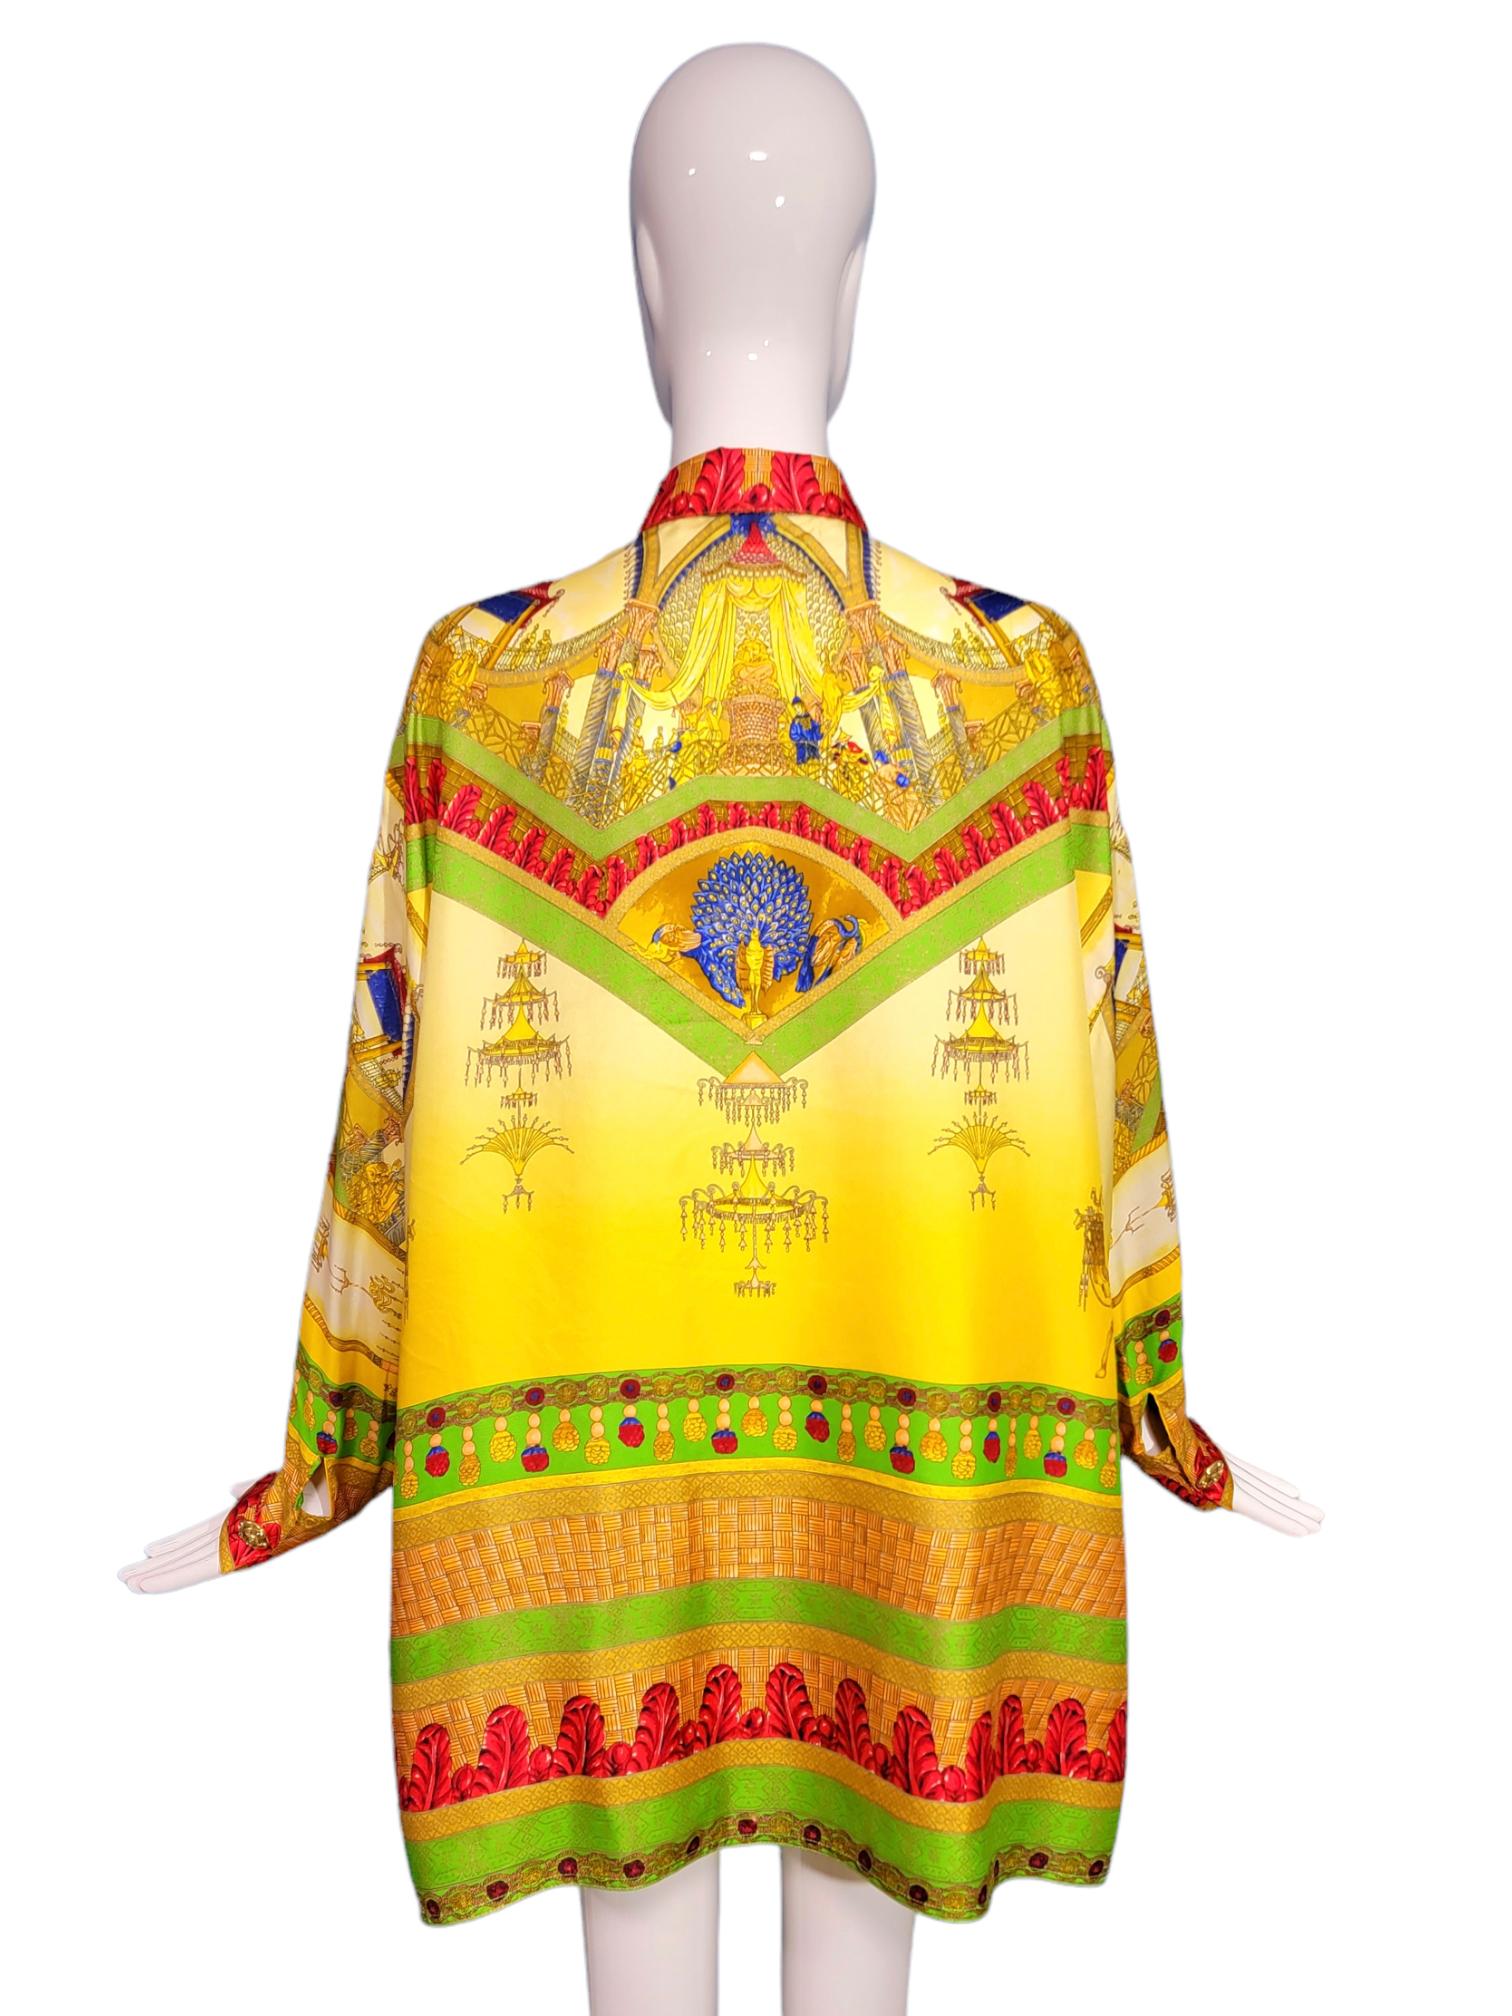 Gianni Versace Marco Polo Silk Shirt Chinese Emperor Peacocks 1992  3